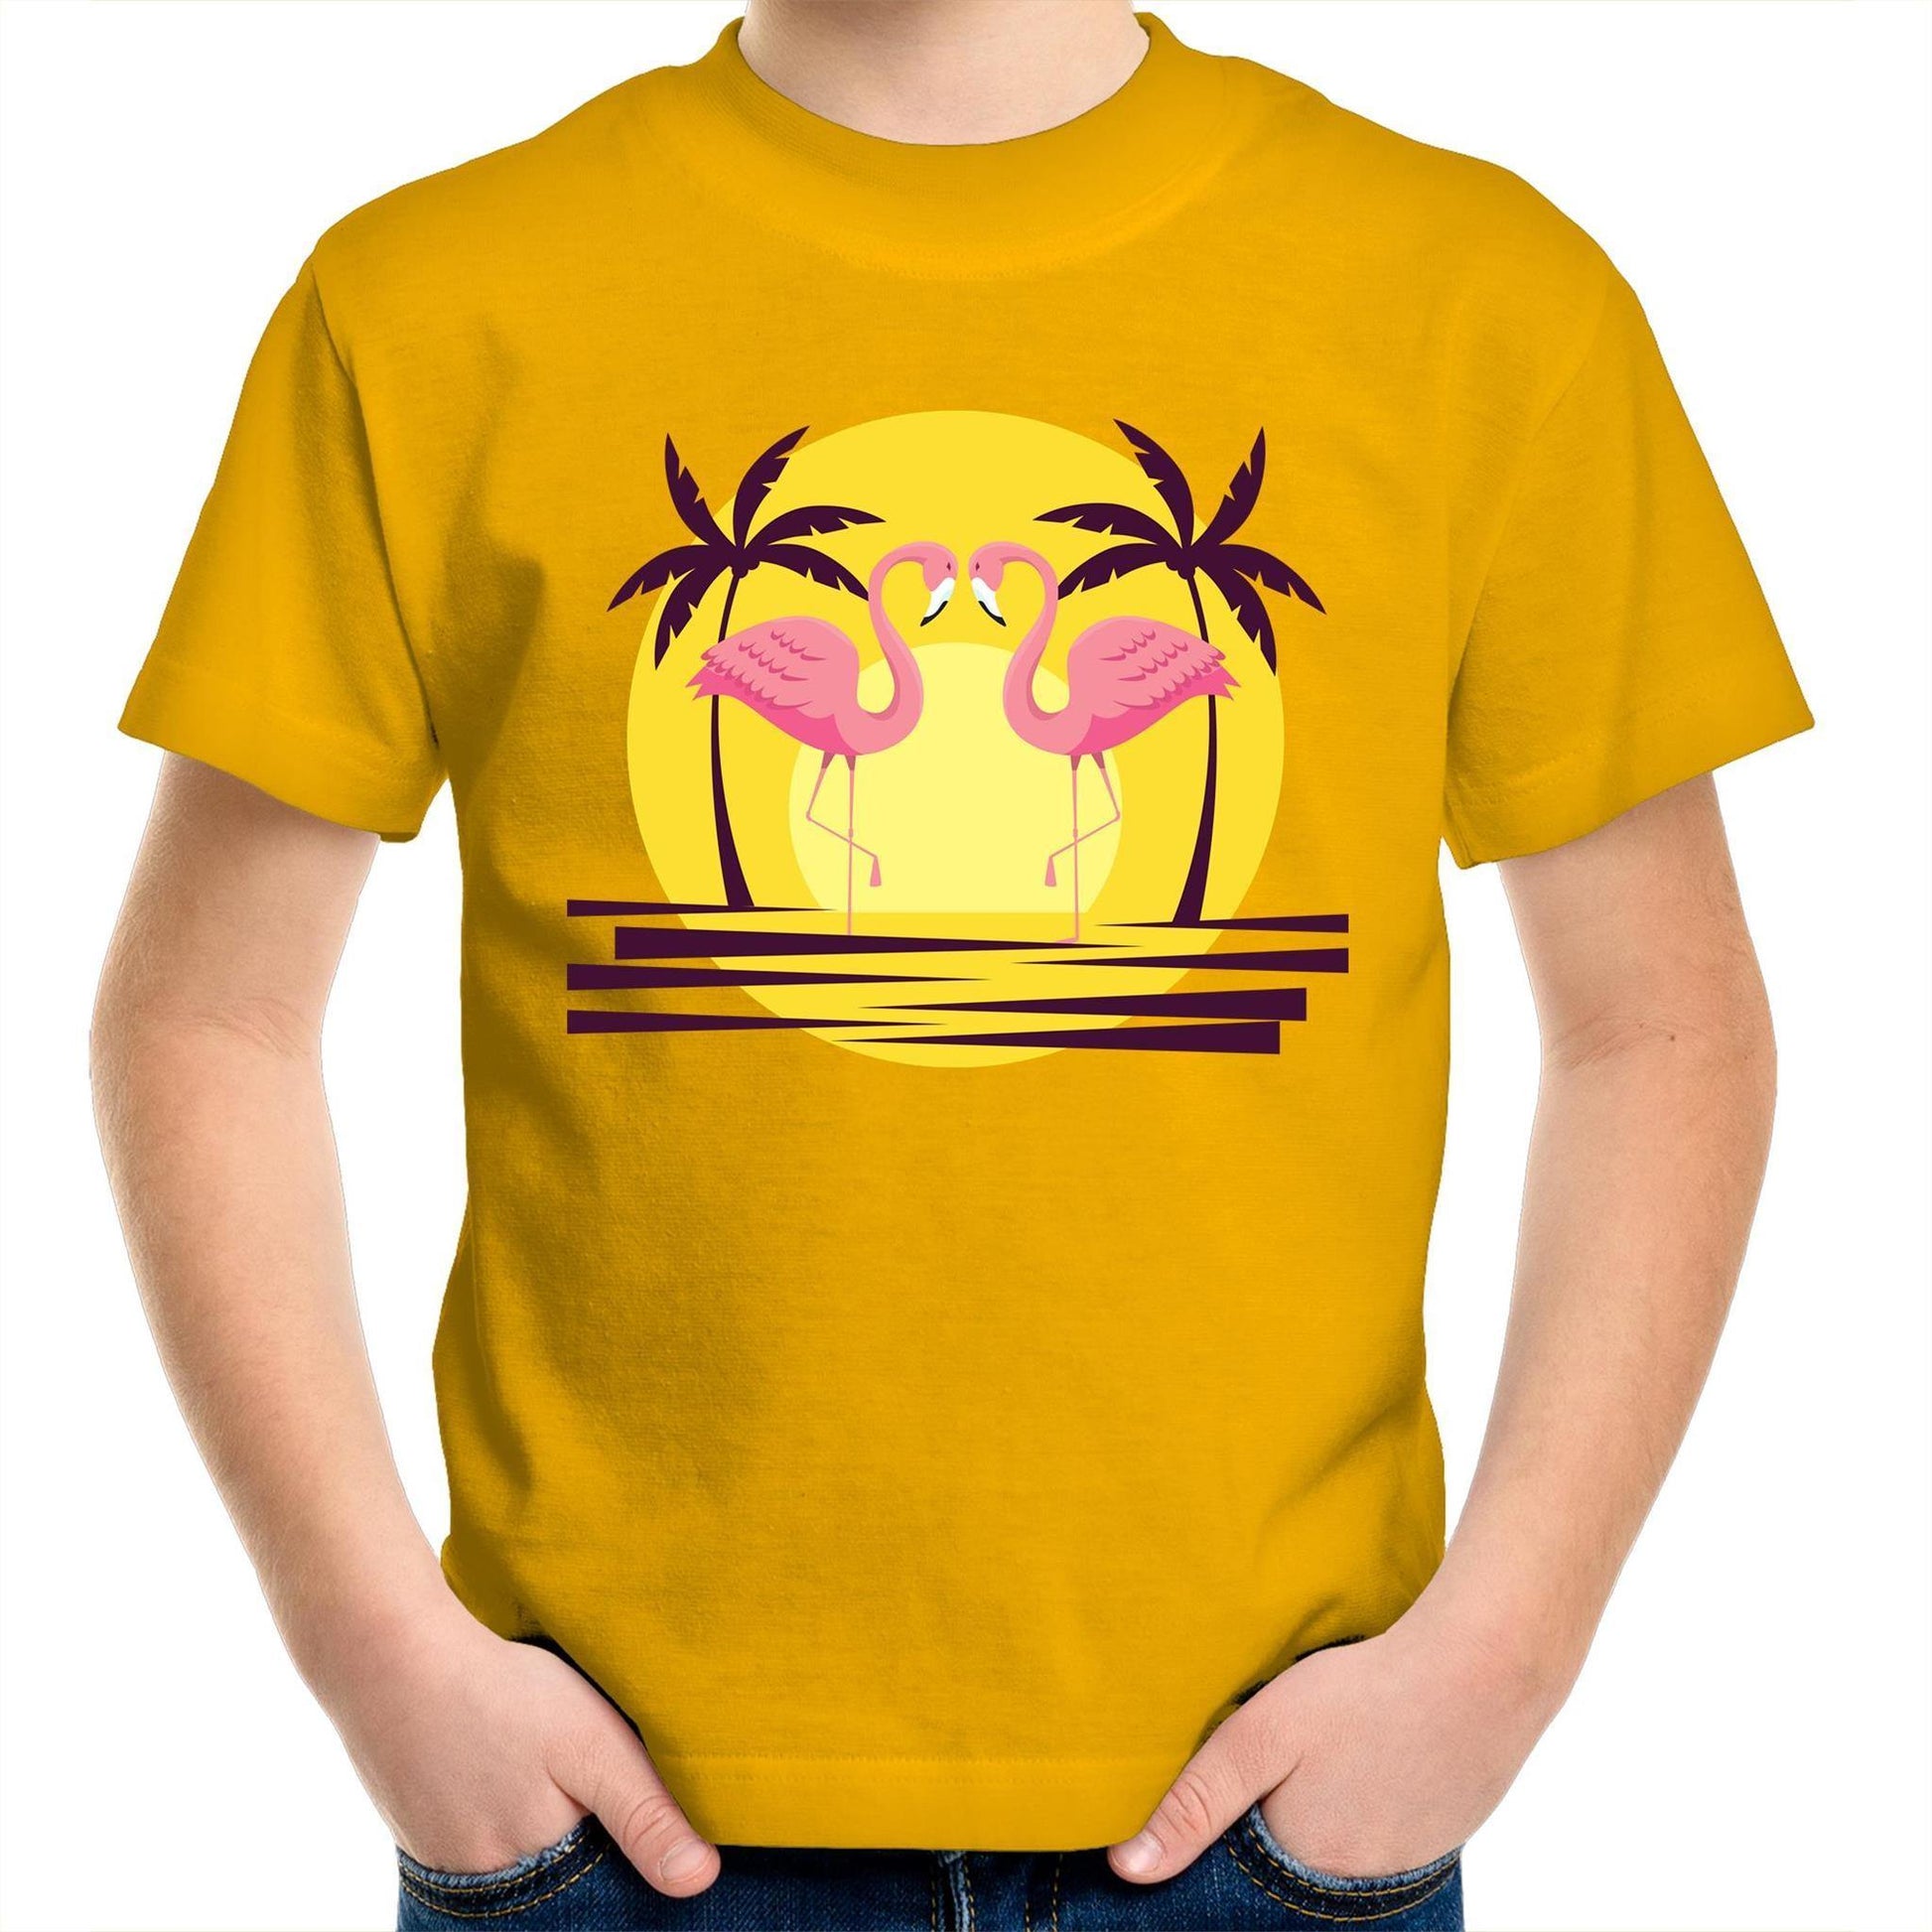 Flamingo Love - Kids Youth Crew T-Shirt Gold Kids Youth T-shirt animal Retro Summer